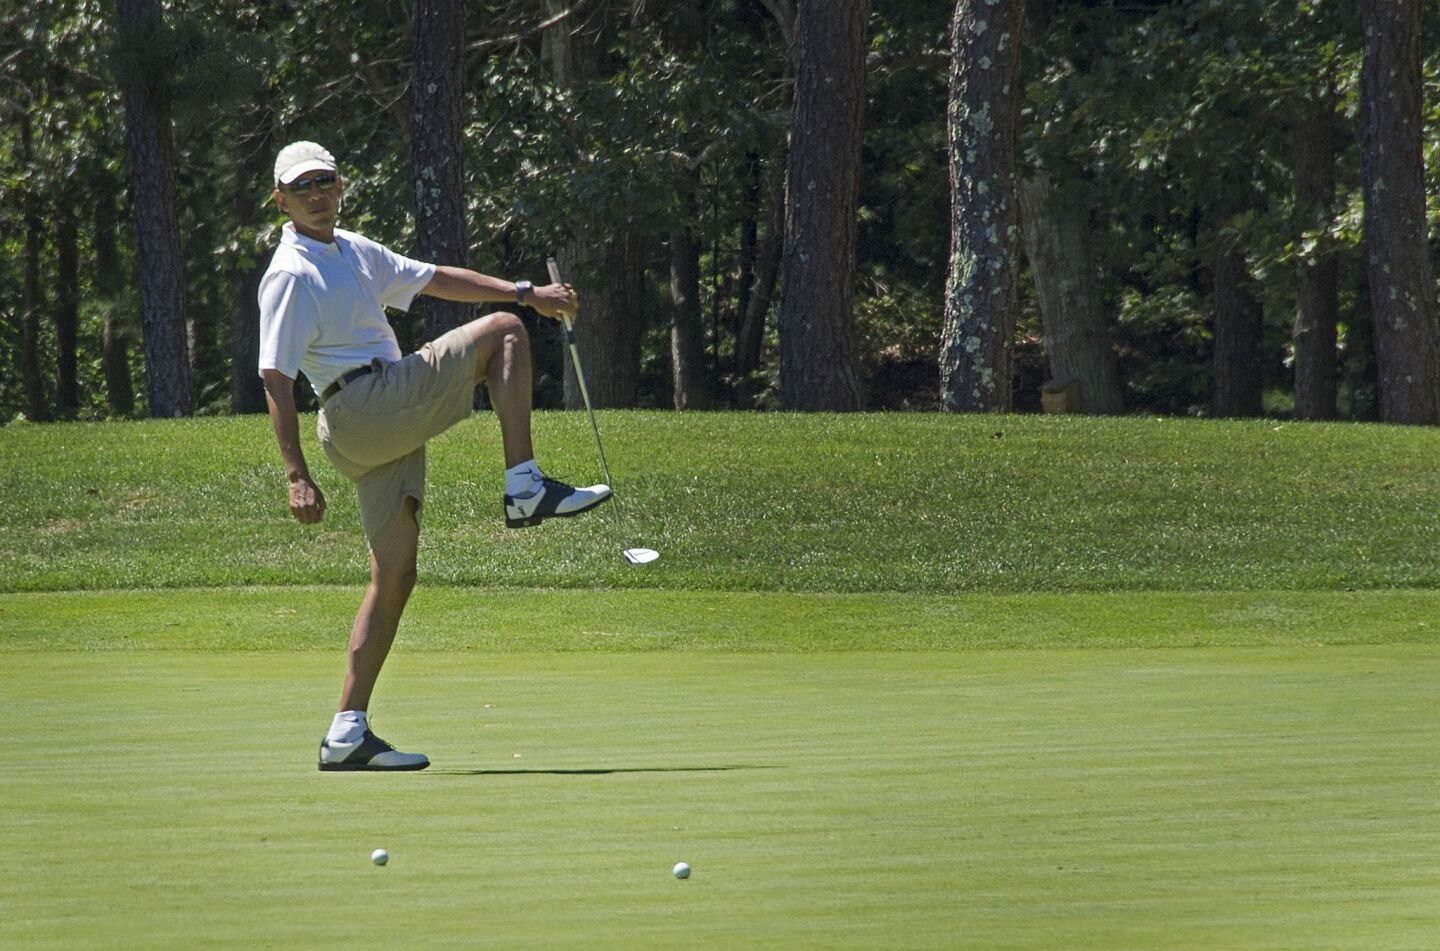 President Obama on vacation